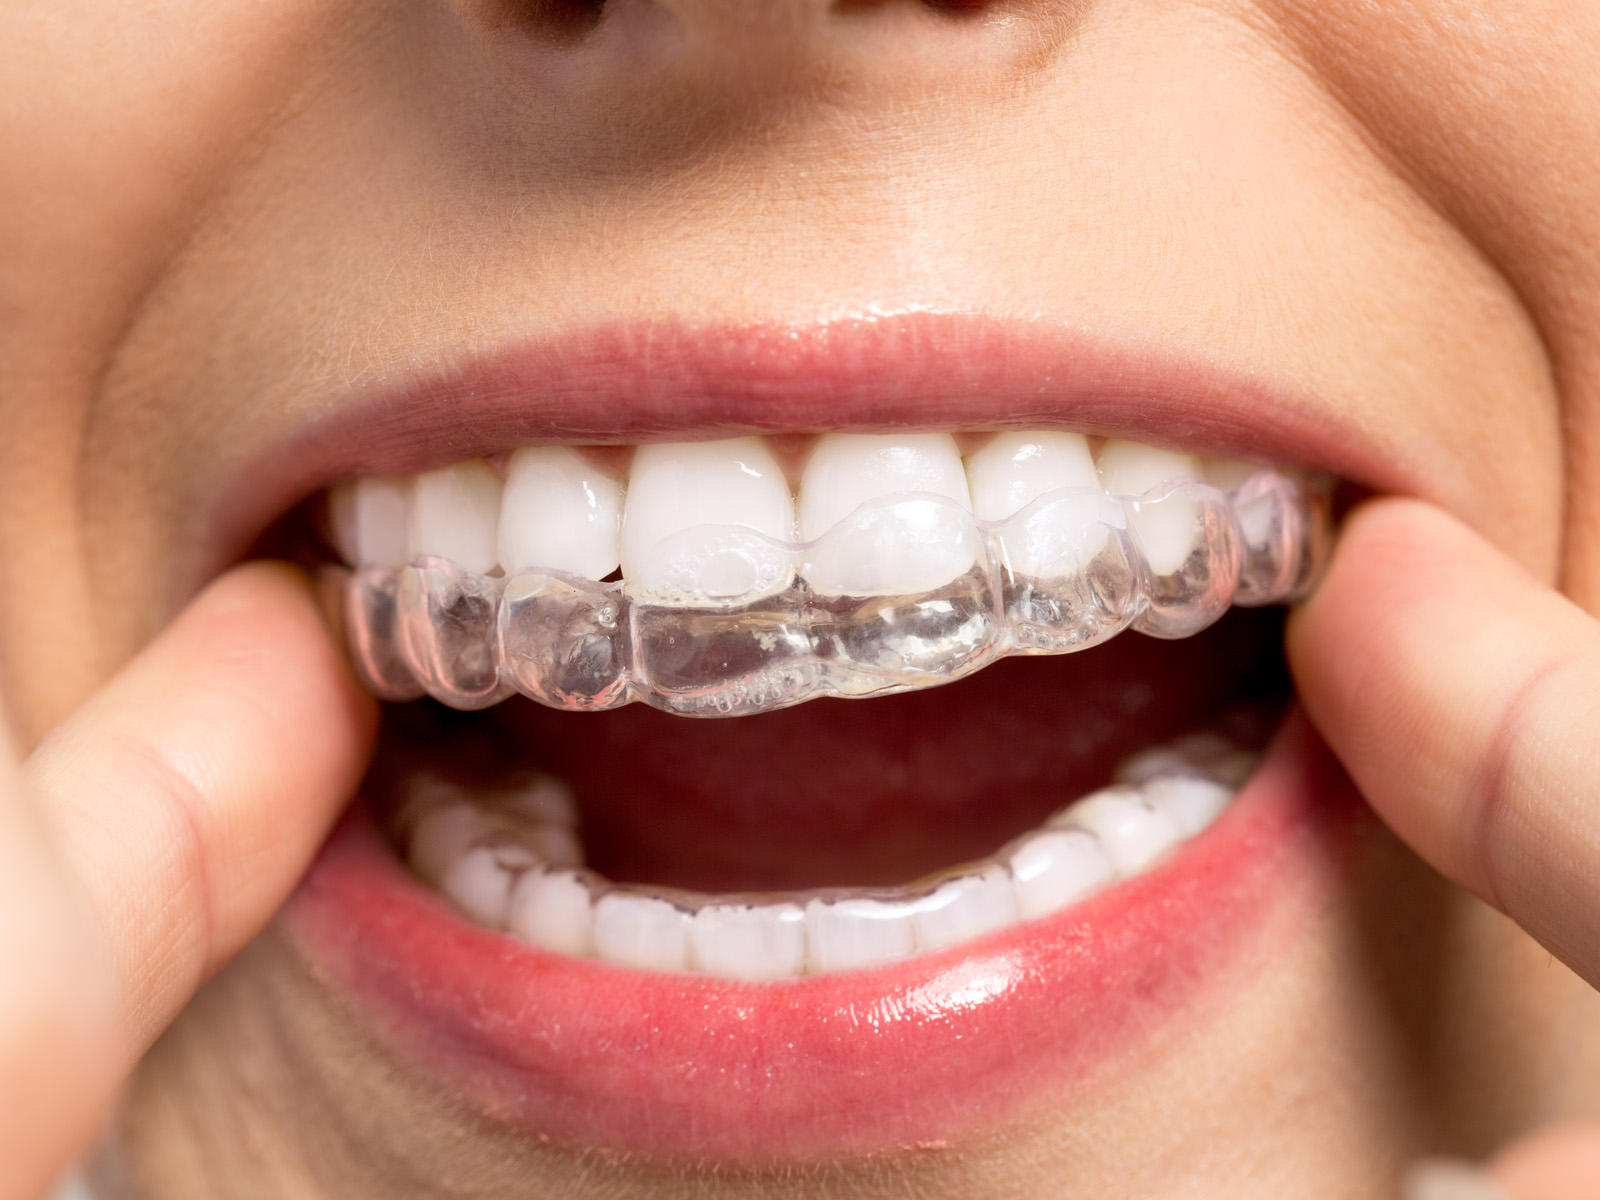 Can Invisalign damage teeth?